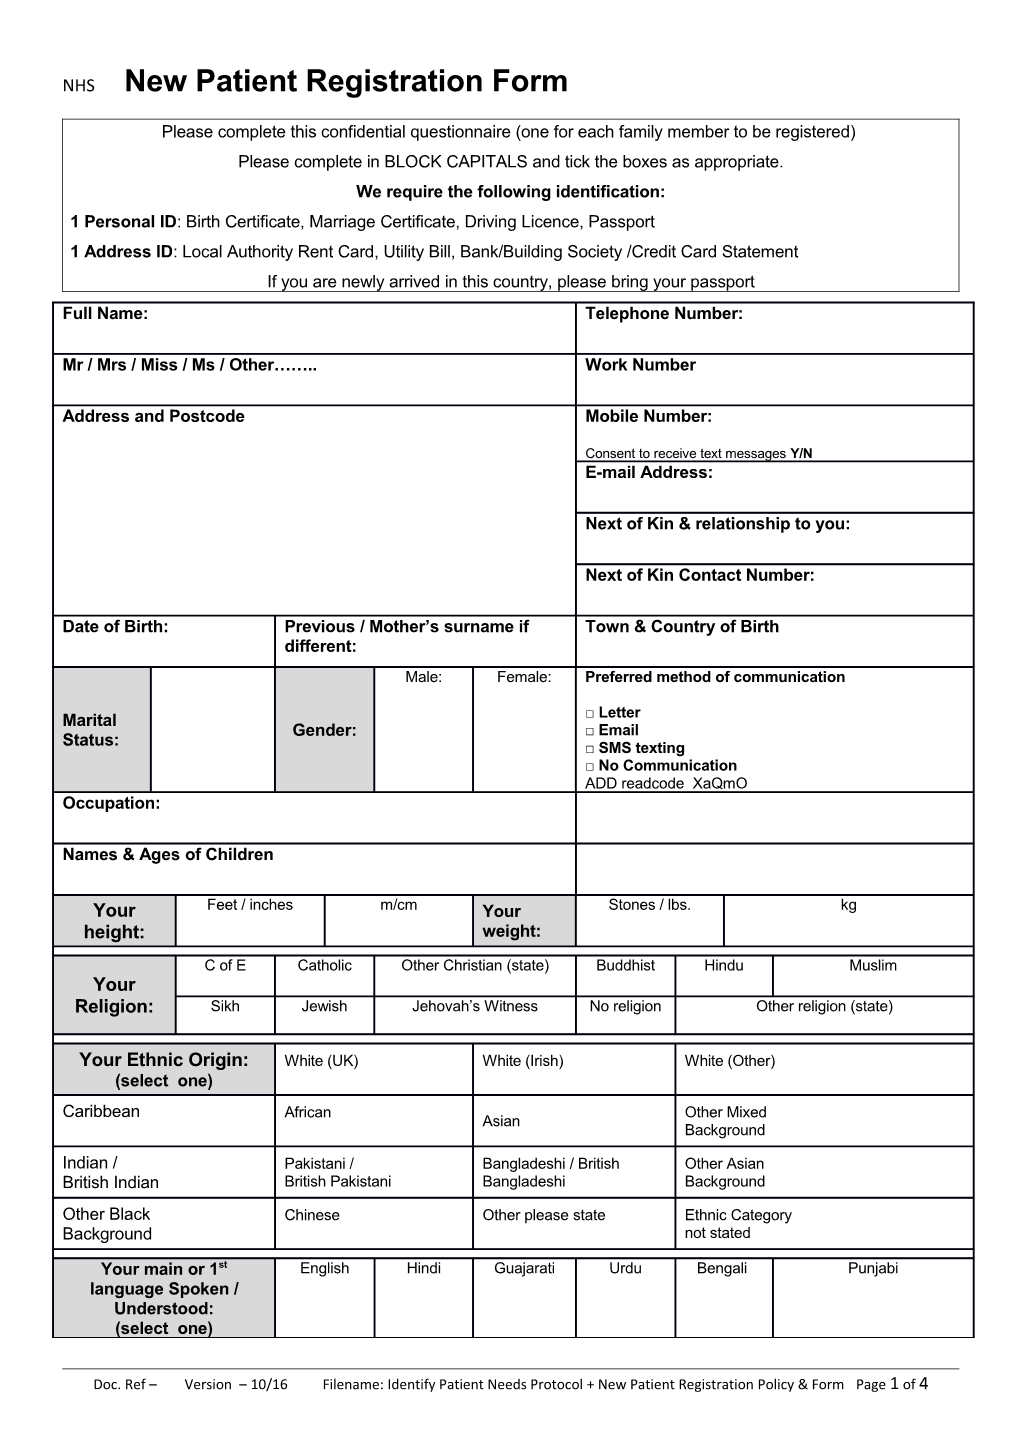 Gamston Medical Centrenew Patient Registration Form